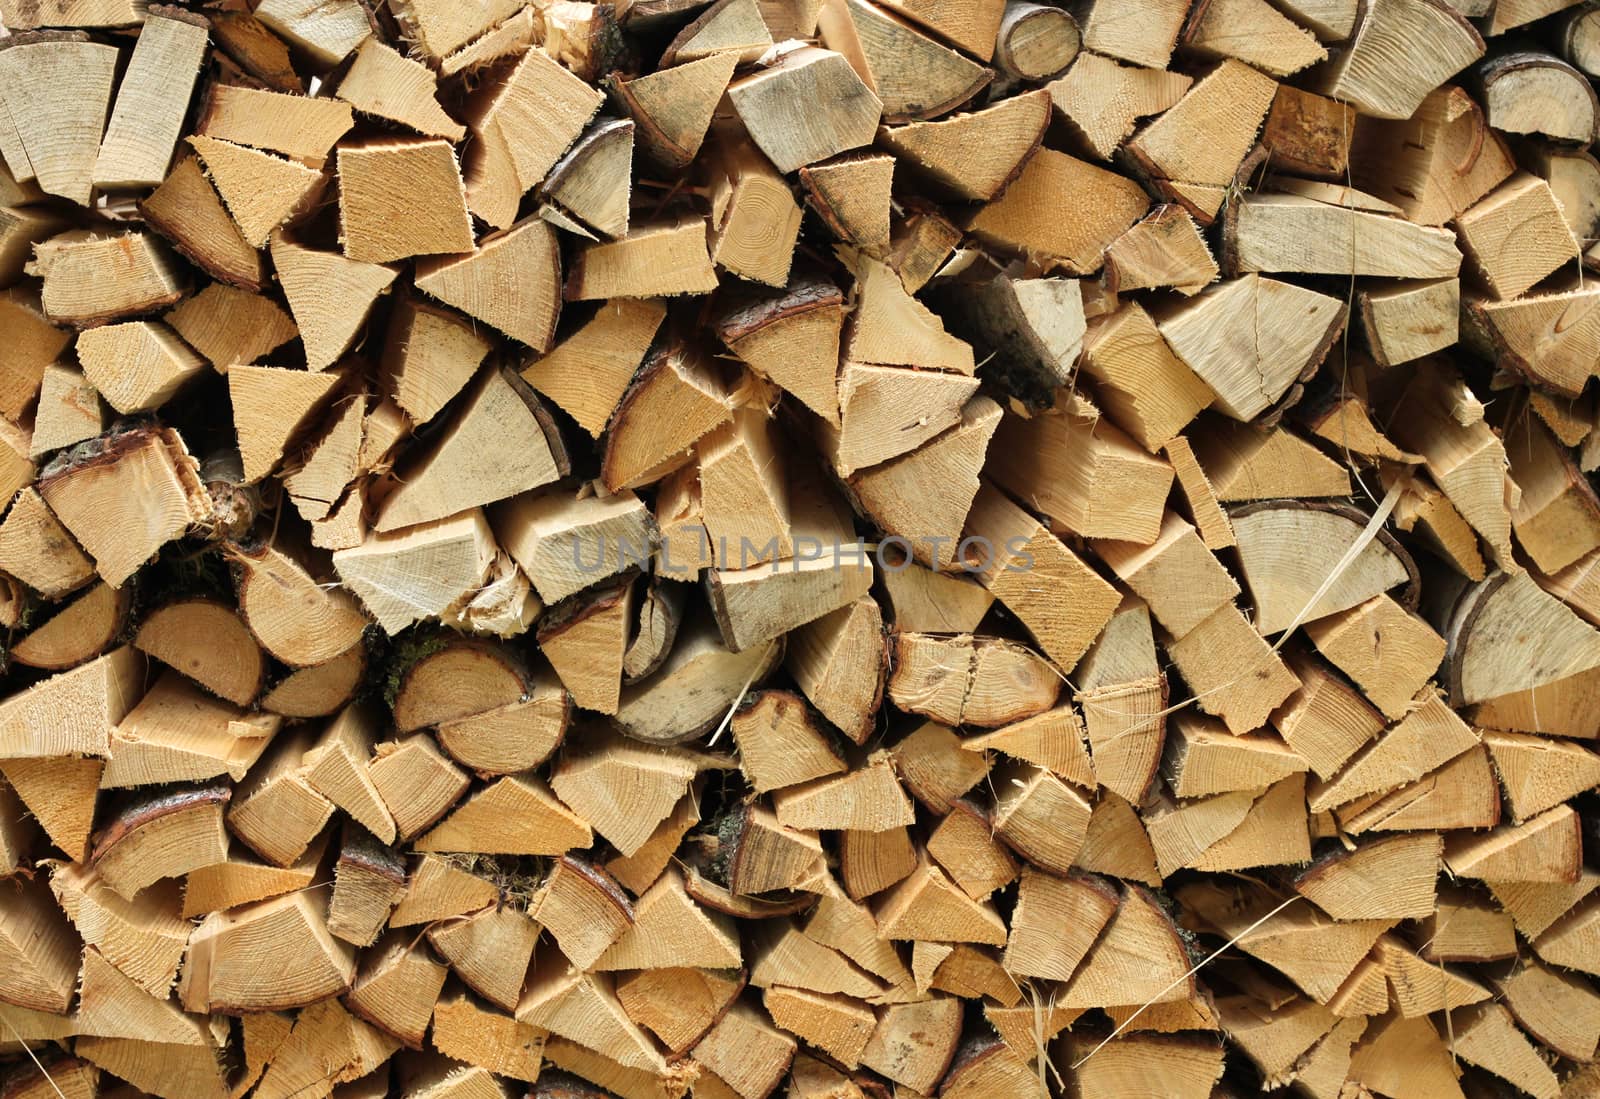 Split firewood by anterovium